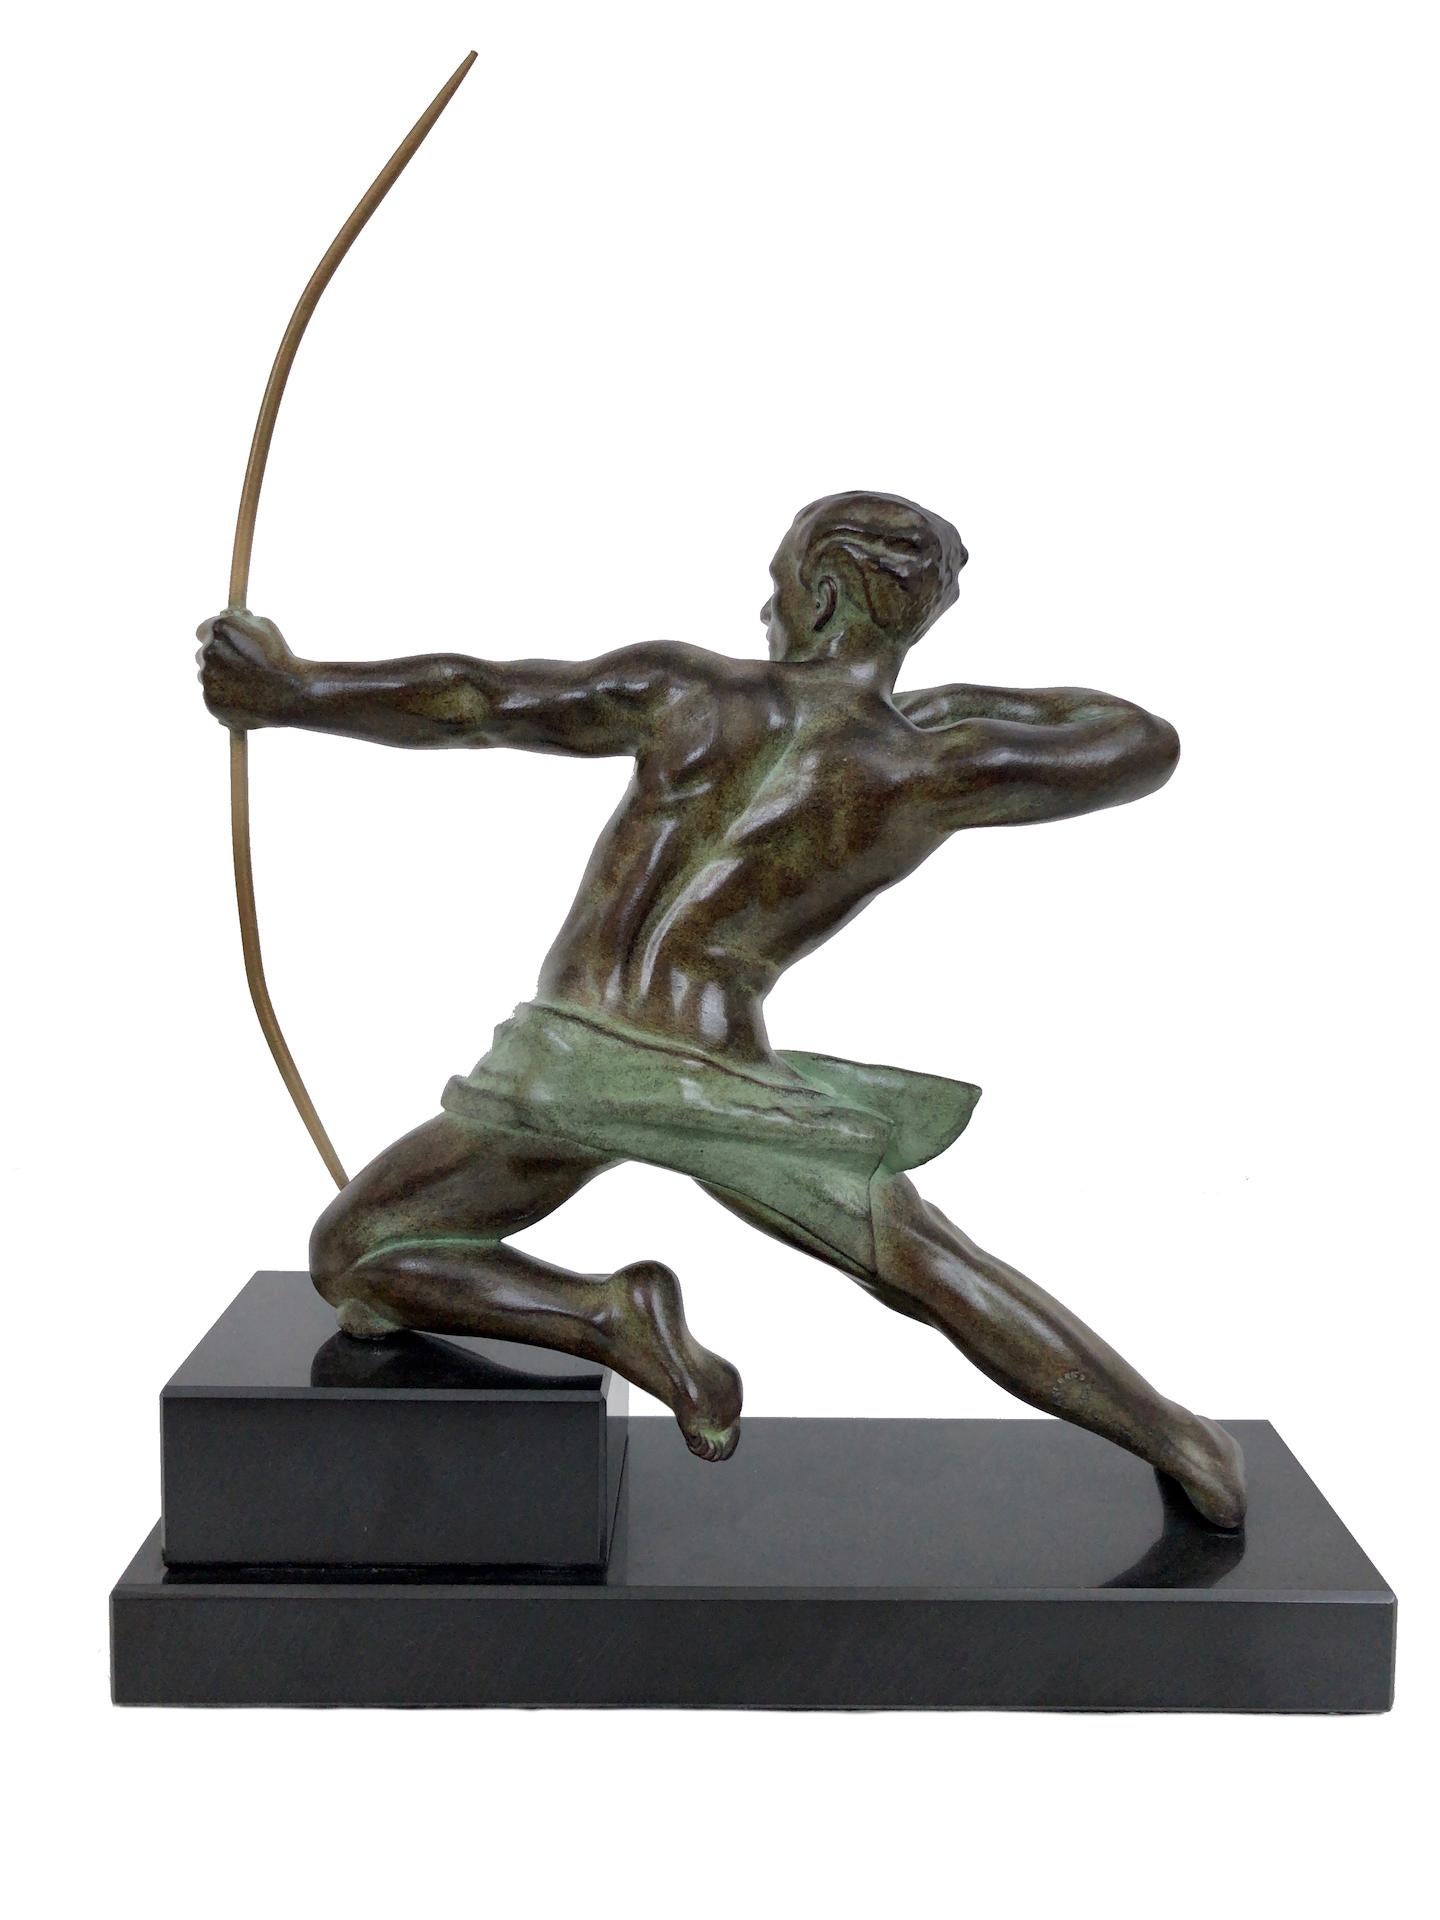 Zinc brut Spartiate by Max Le Verrier Sculpture Spartan Archer Warrior in Spelter en vente